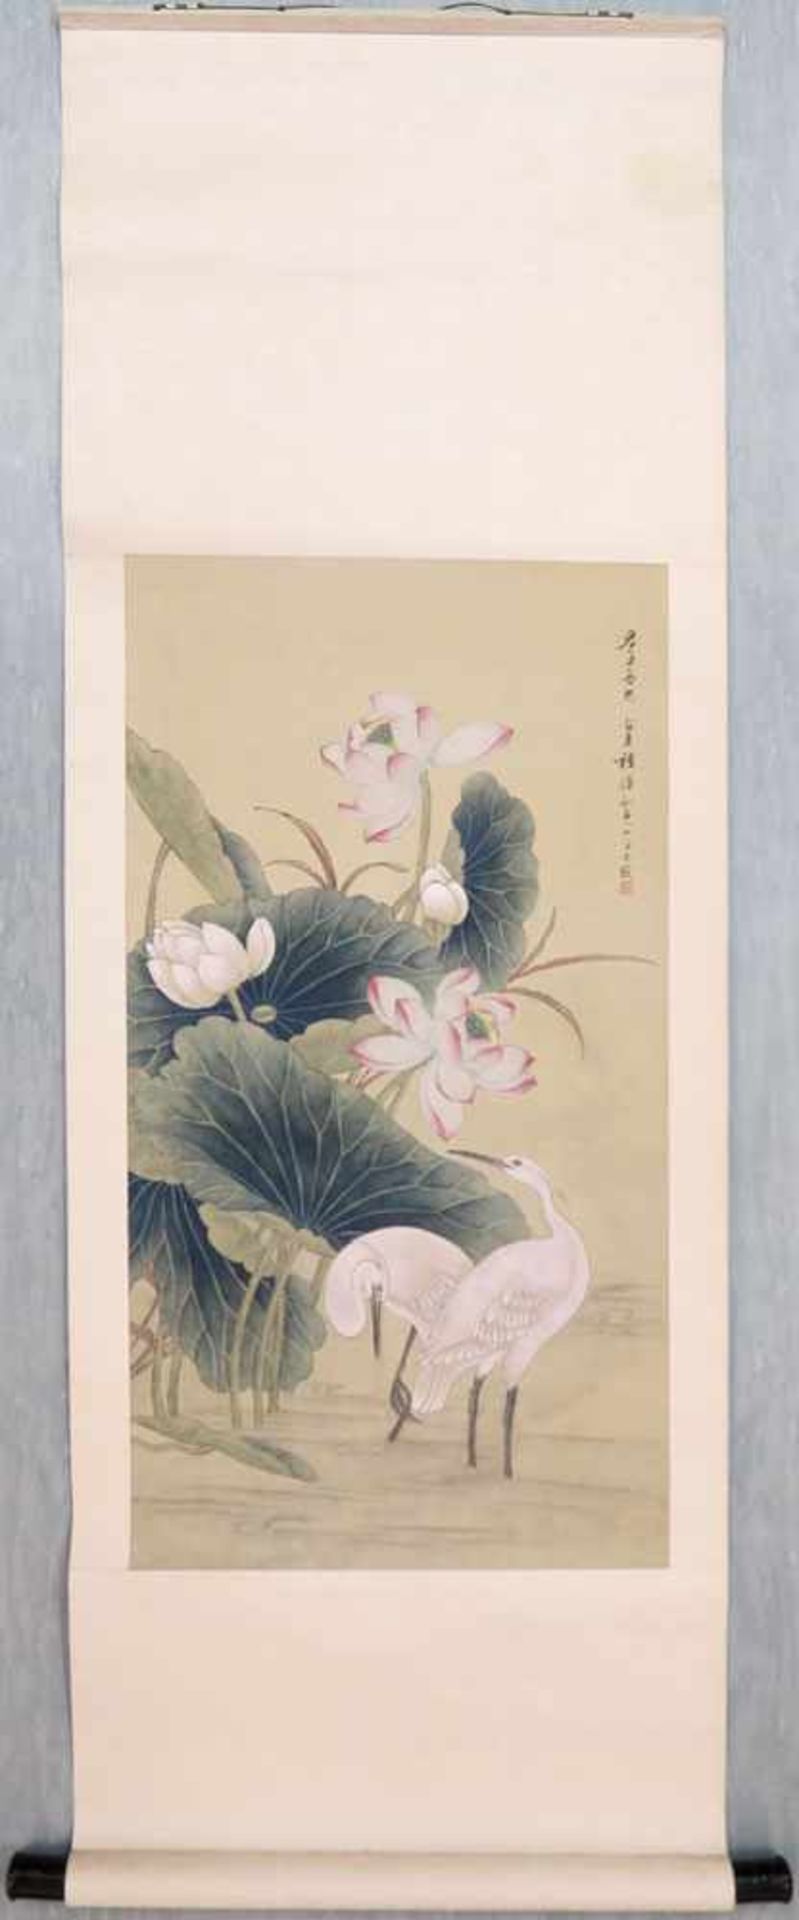 Rollbild: Zwei Reiher unter LotusblütenChina. Bez. BA: 77,5 x 41,5 cm. Gesamt: 145 x 50,5 cm.- - -